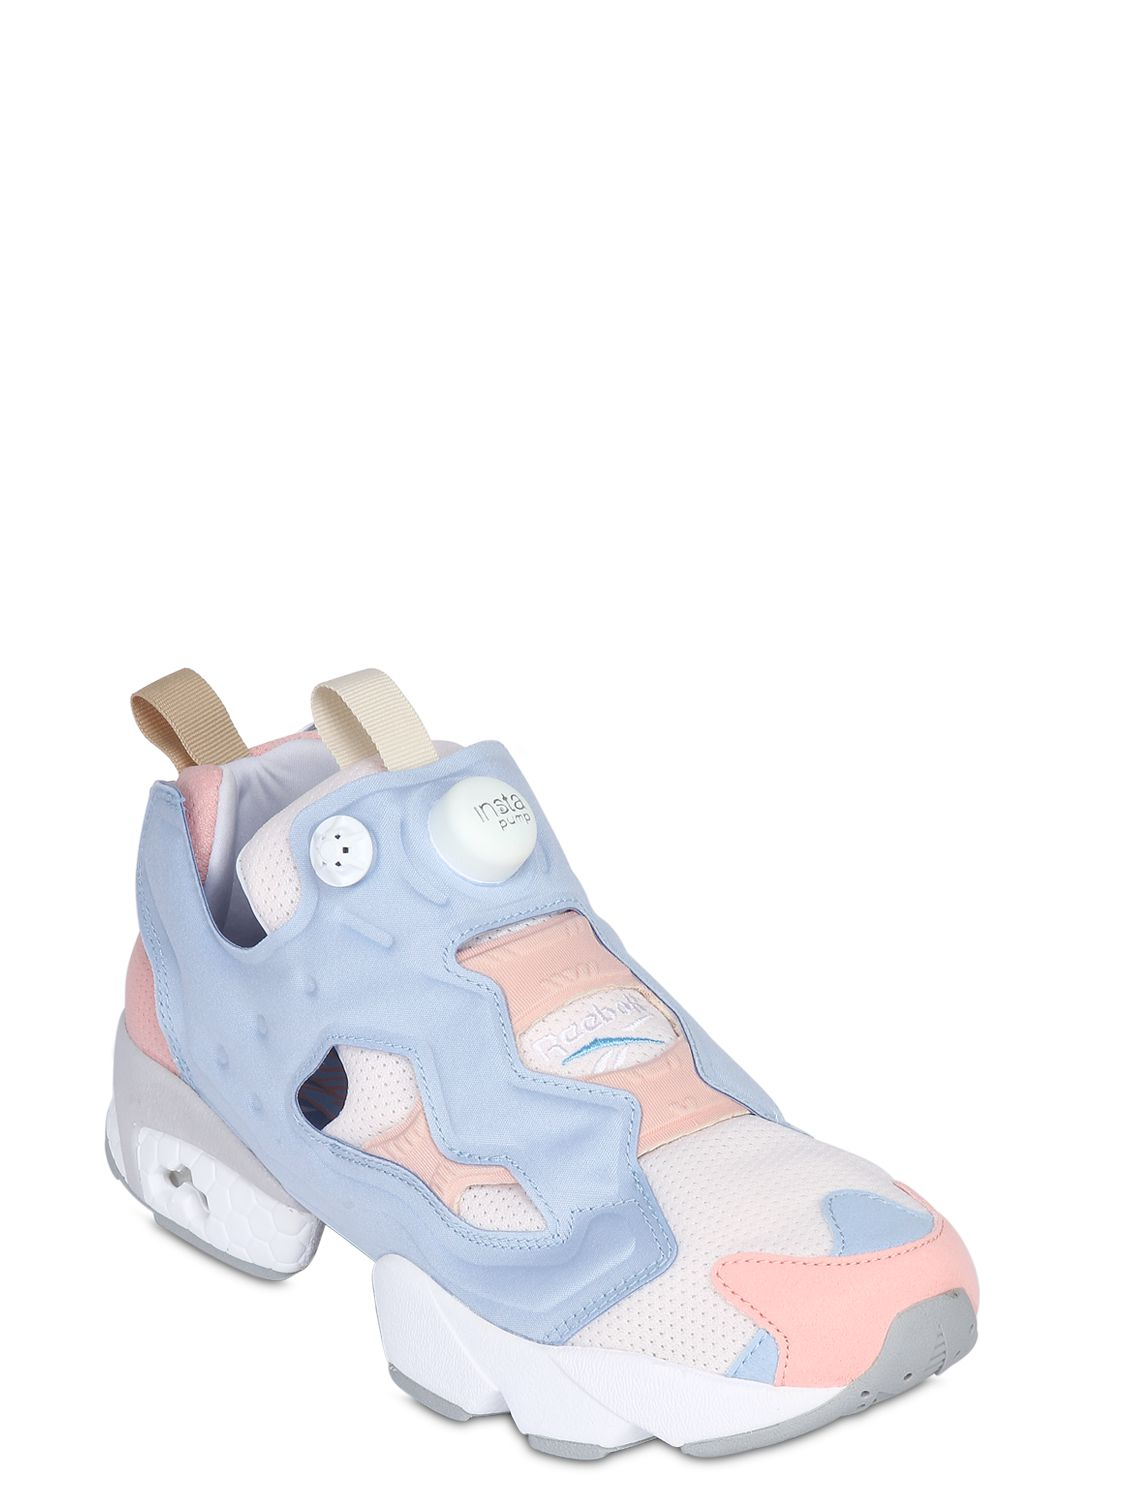 Reebok Instapump Fury OG MU White Pink Men Women Casual Shoes Sneakers DV3696 